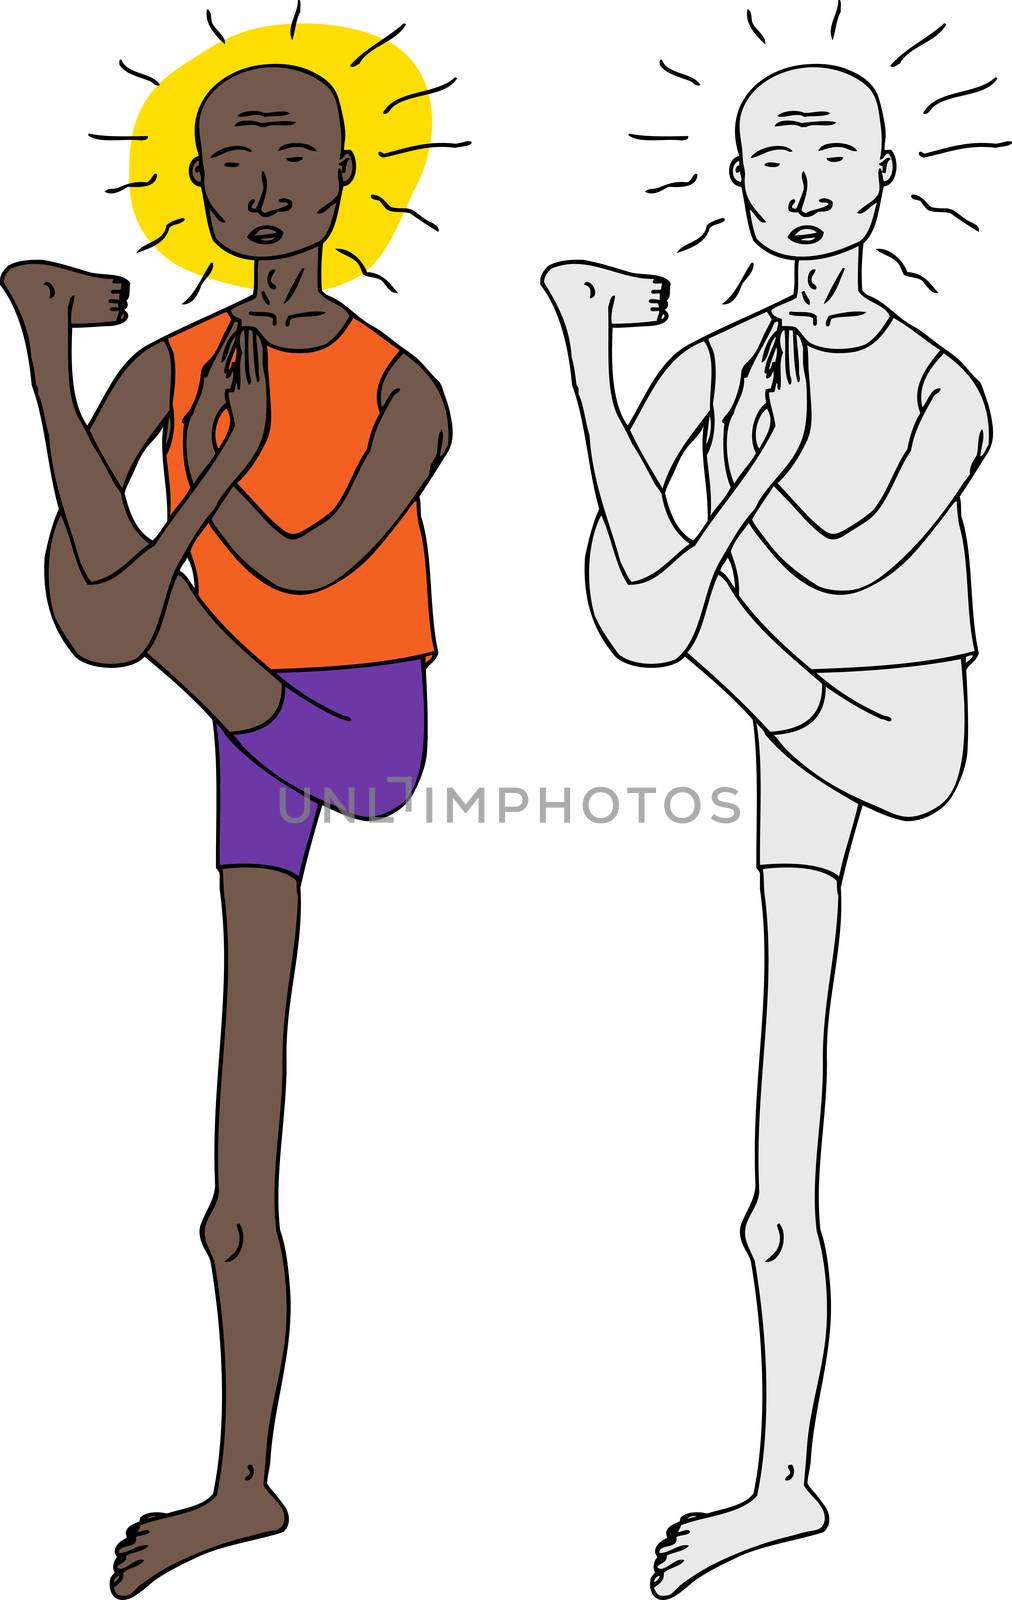 Cartoon of tall man in unique yoga pose